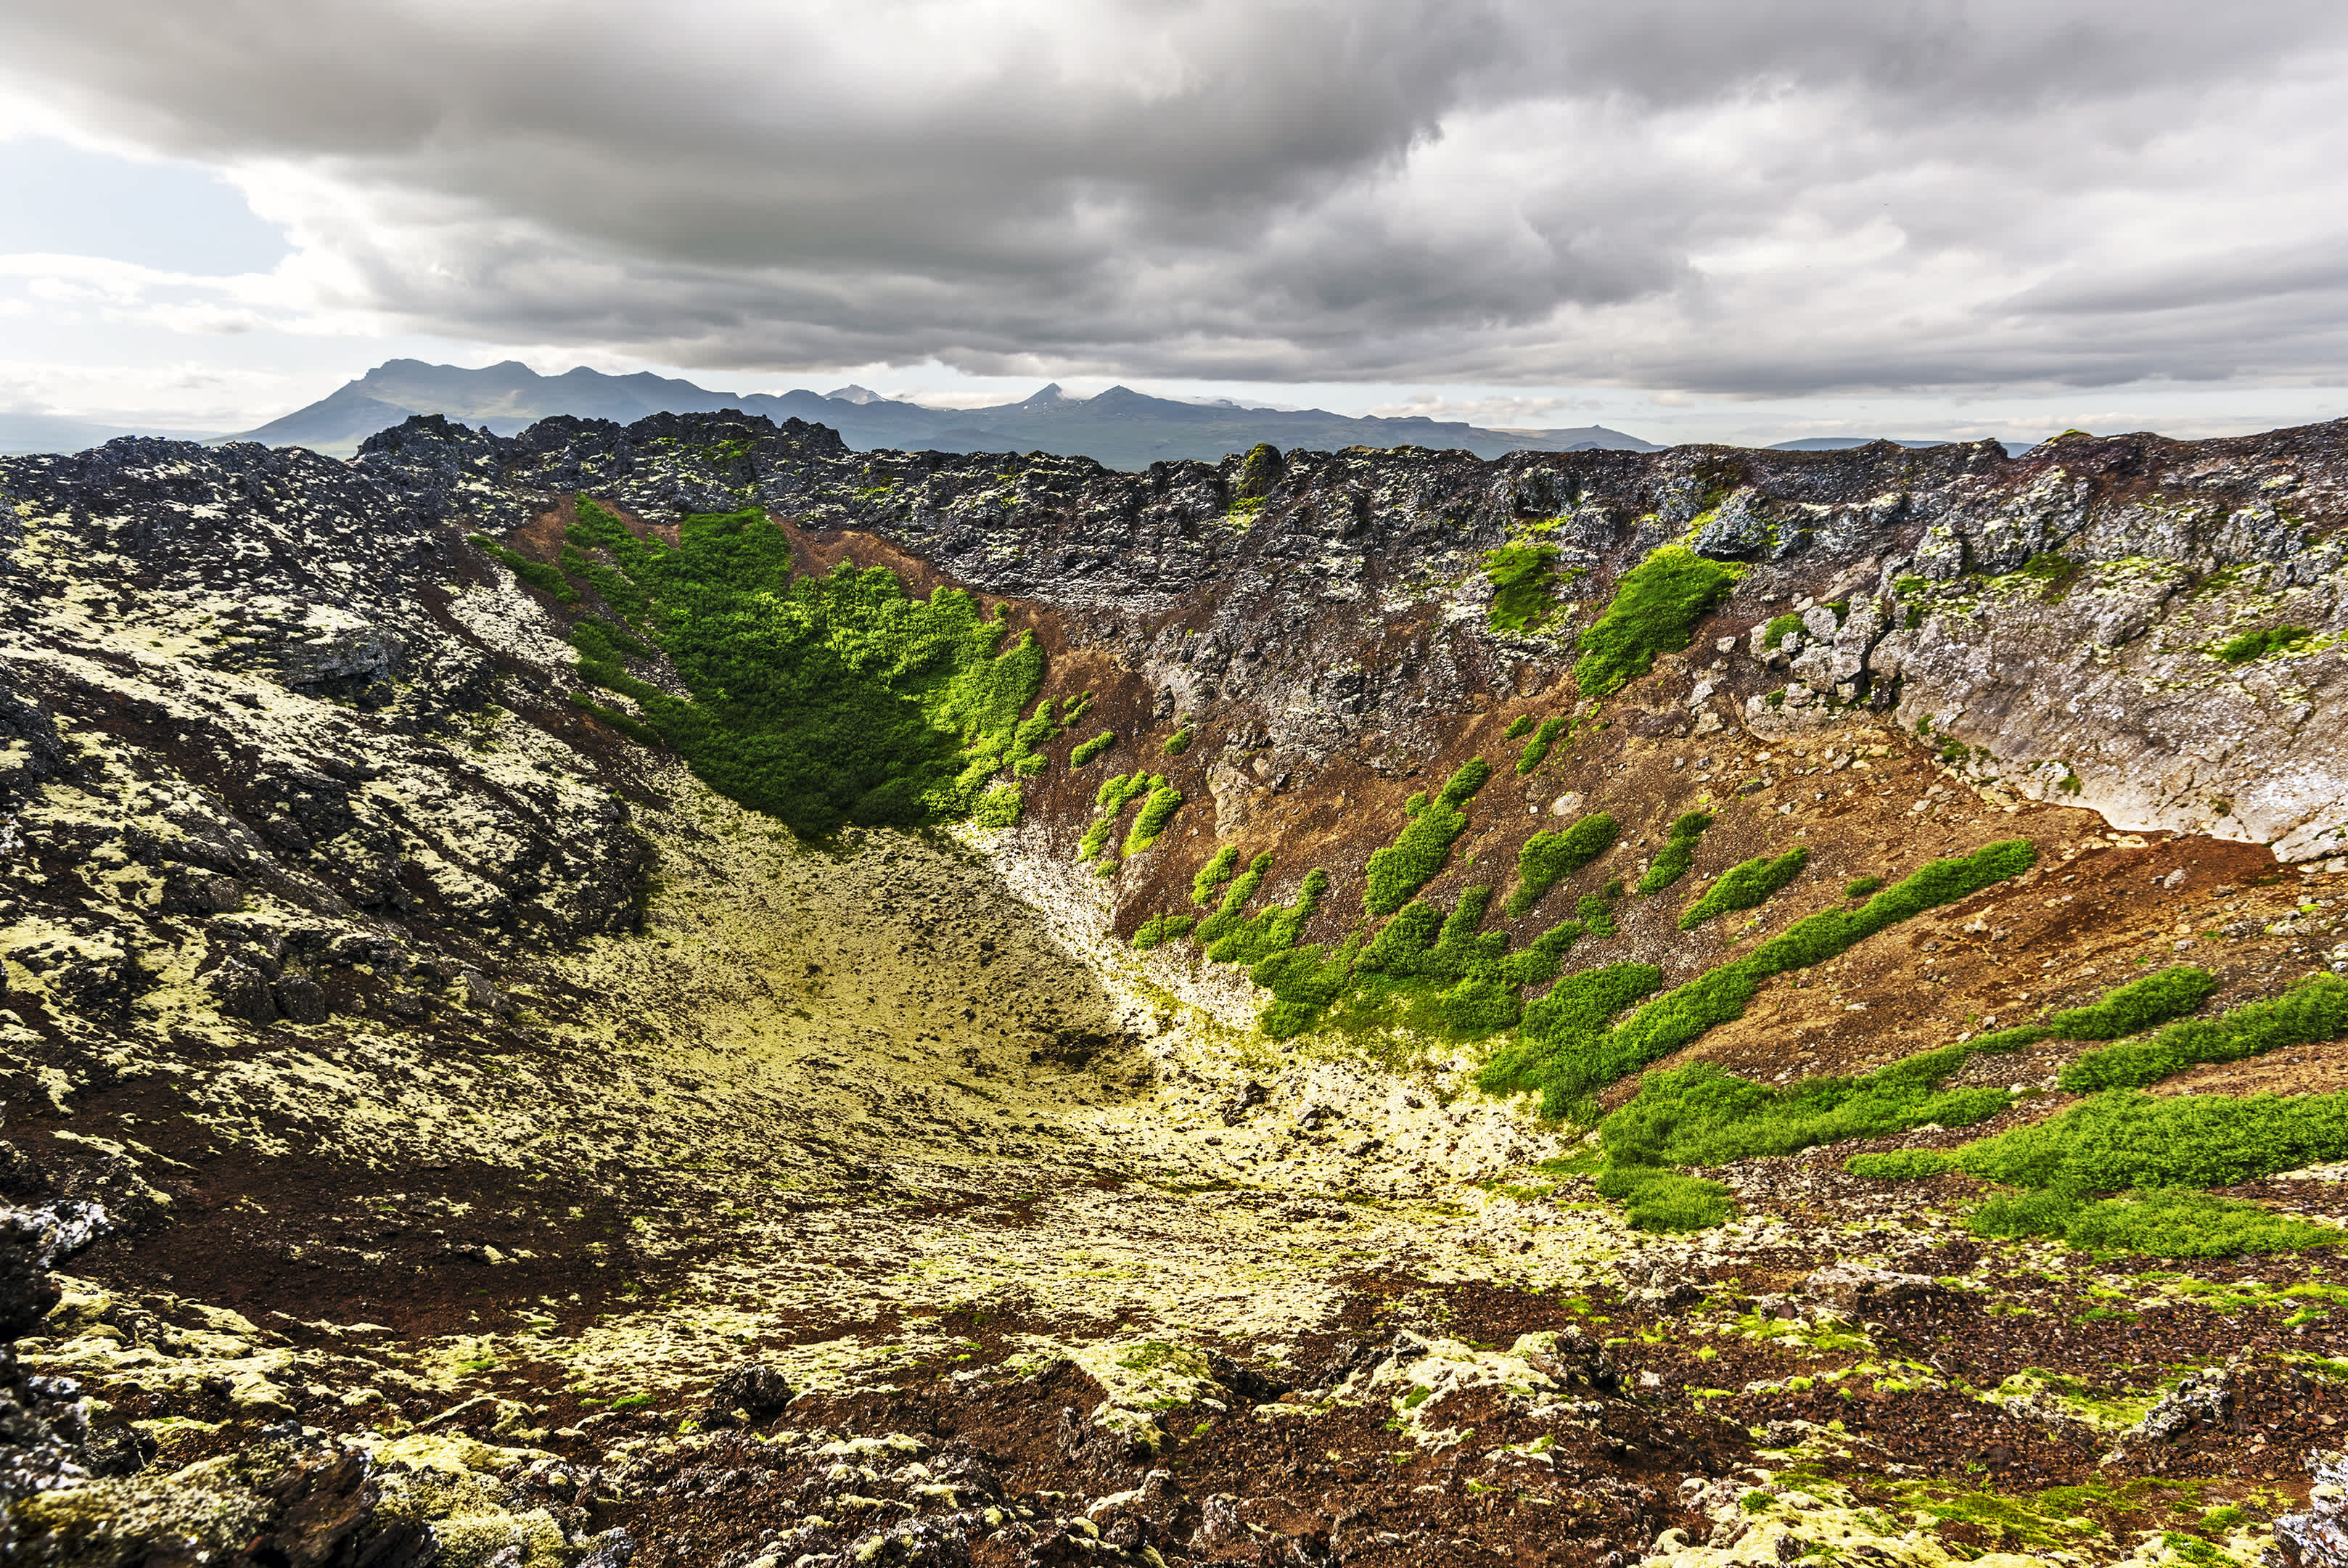 Inside view of Eldborg volcano crater in Vesturland region of Iceland.

